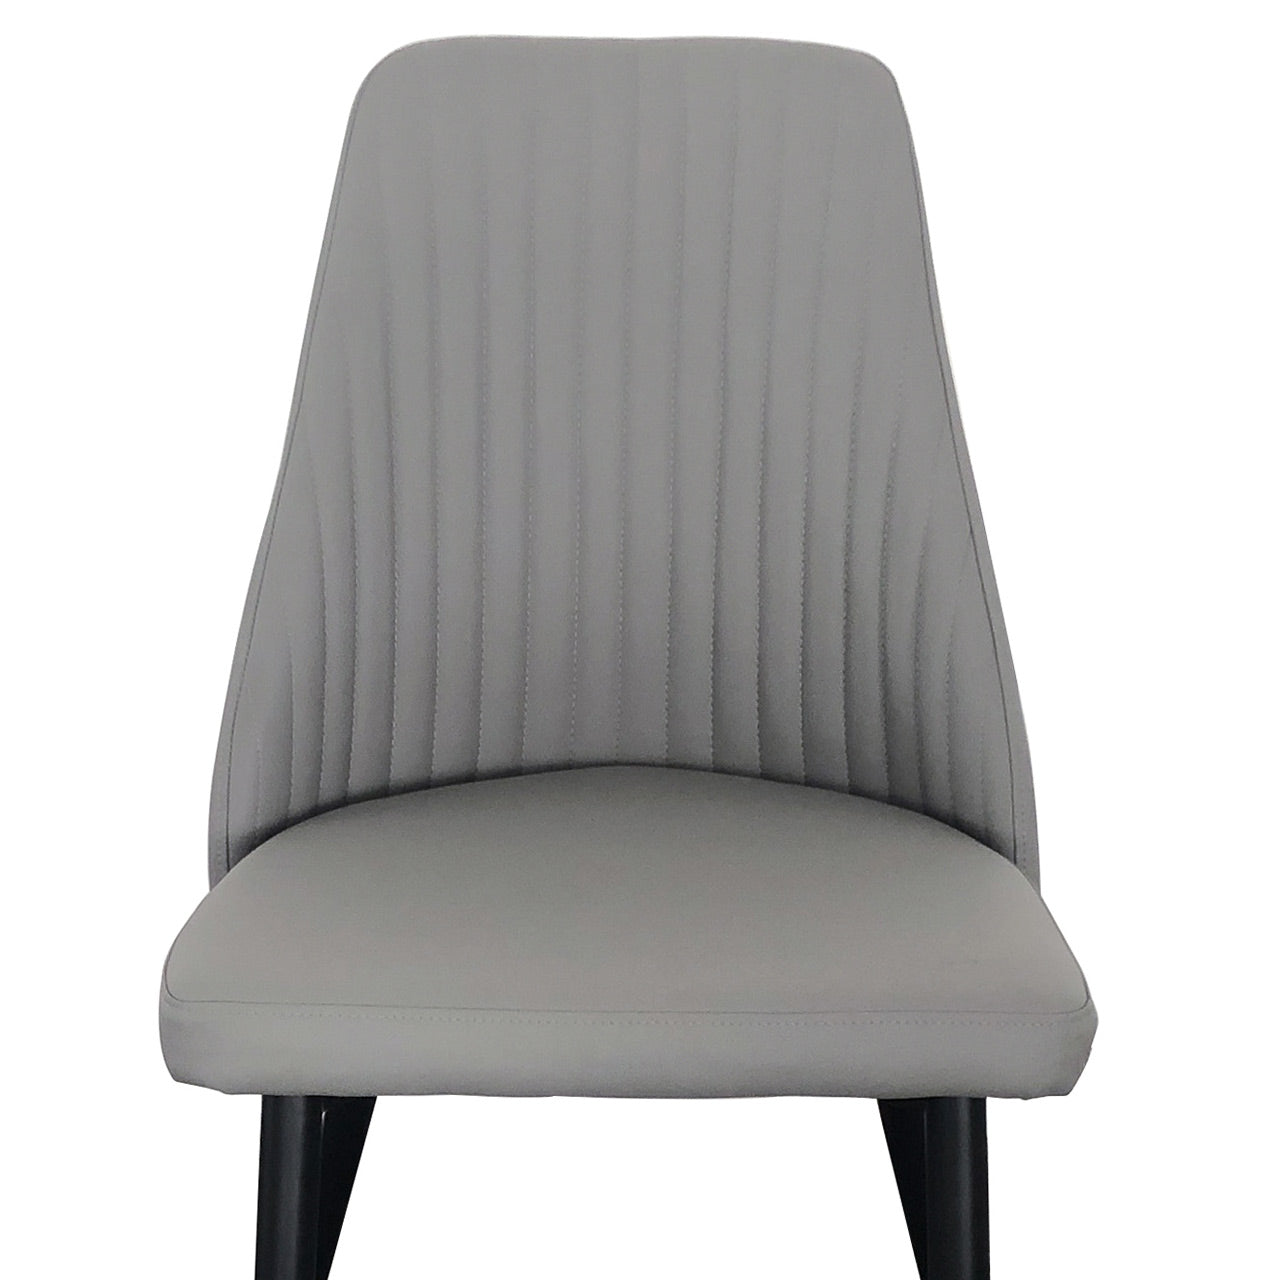 grey leather chair in Dubai